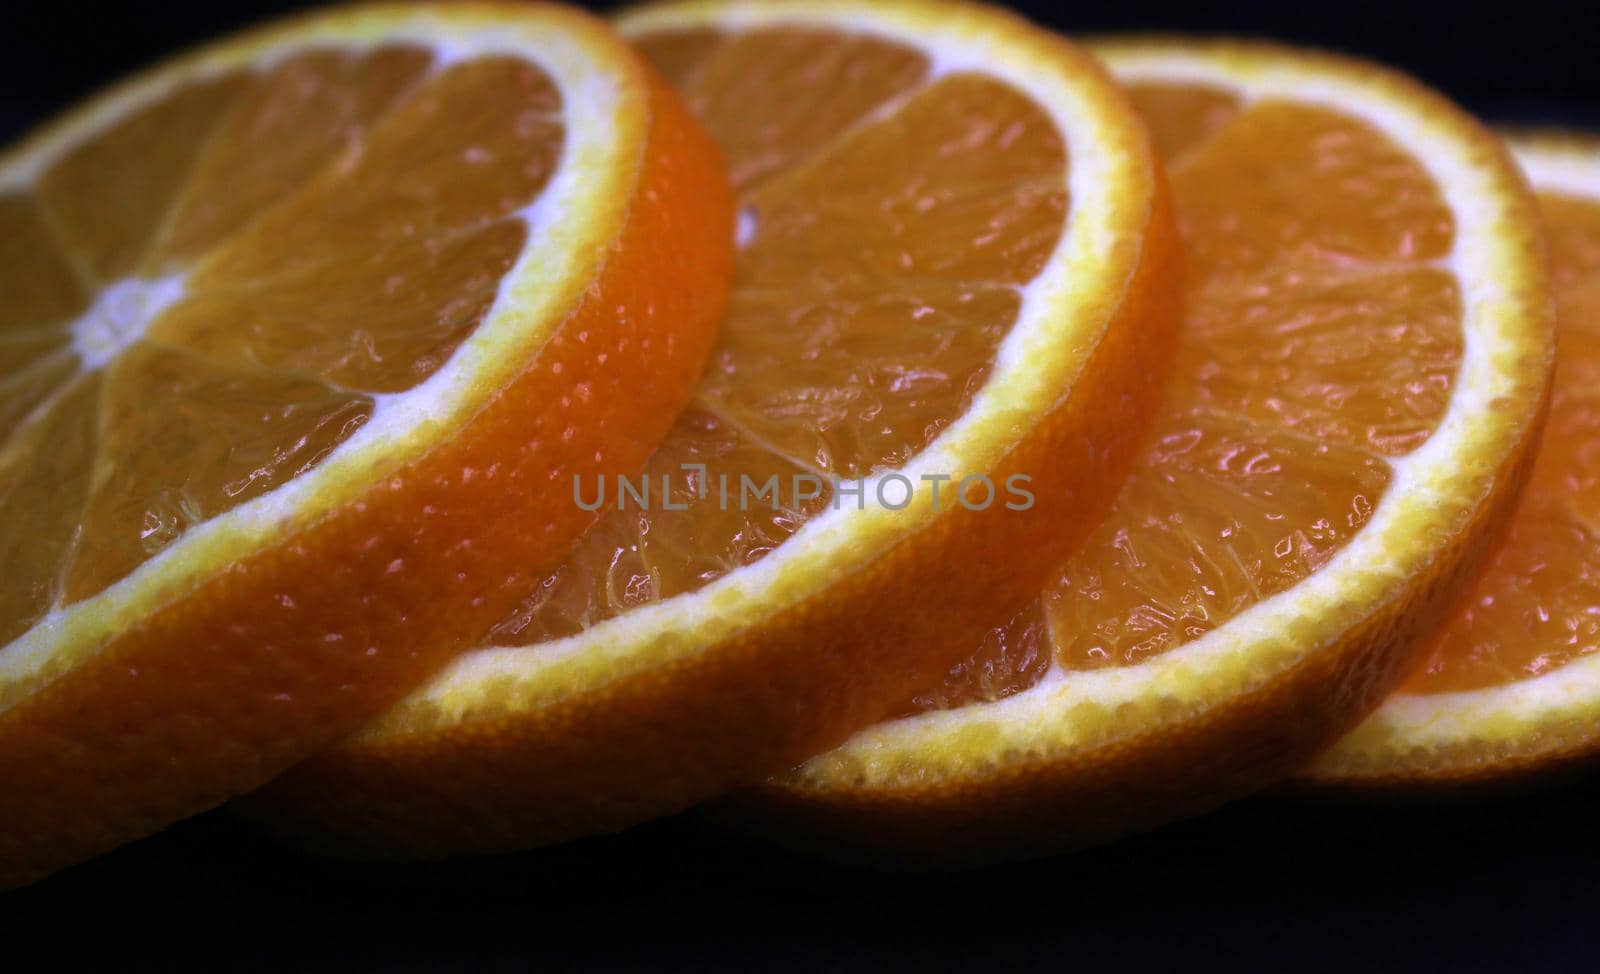 Close-up of orange slices on a black background..